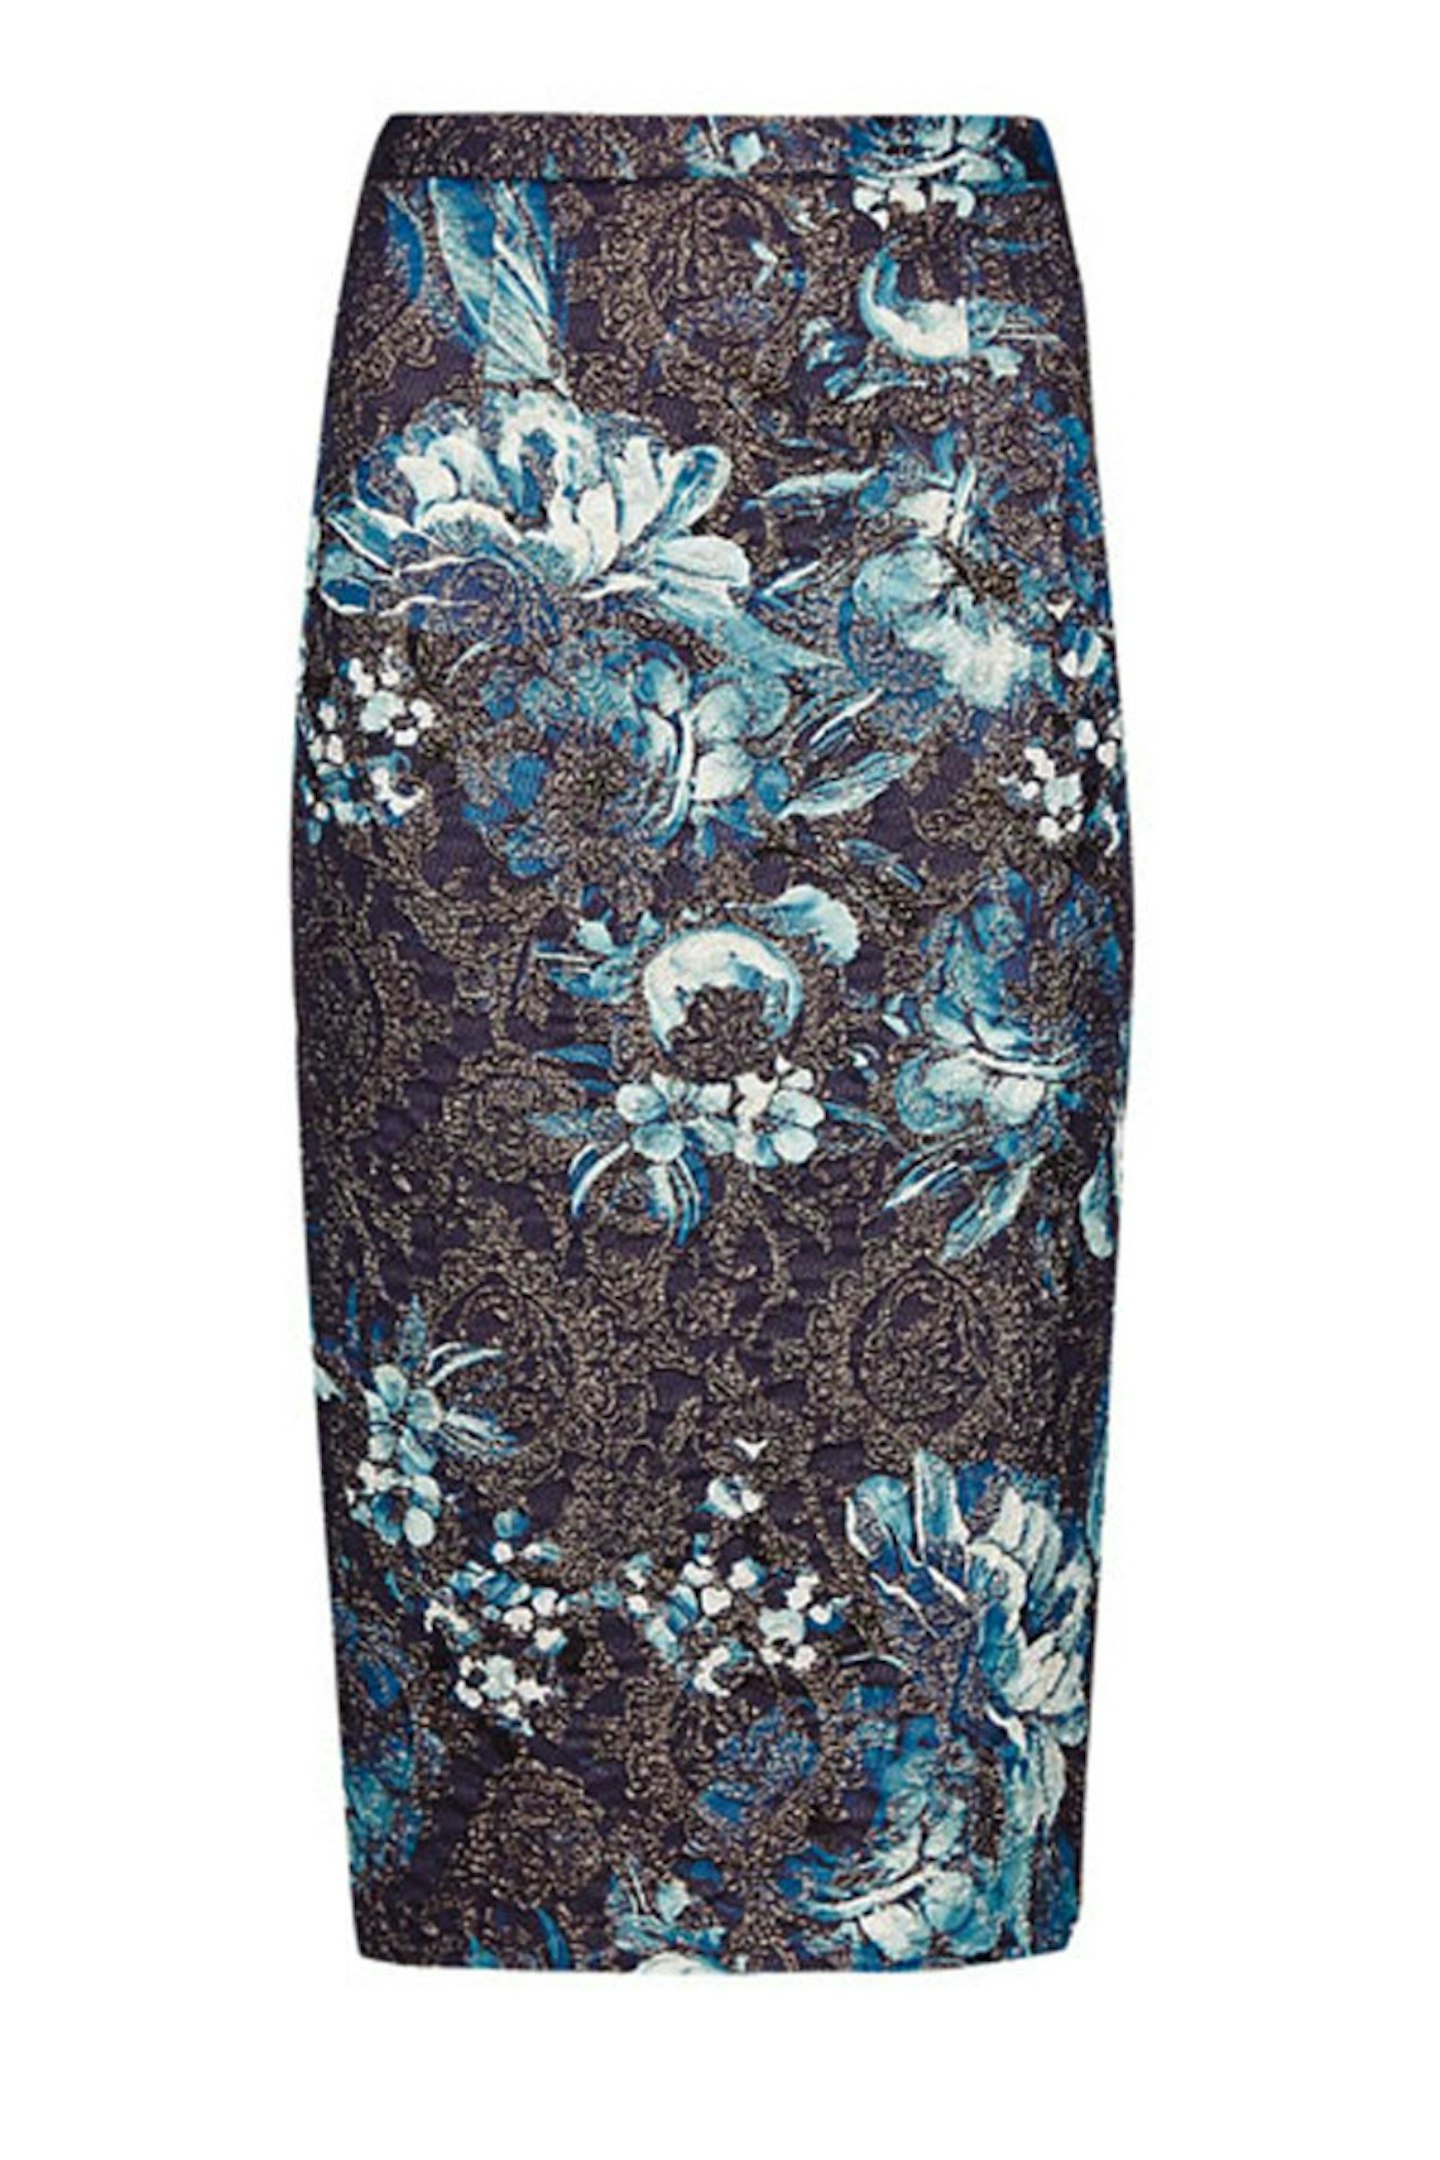 Floral Metallic Pencil Skirt, £45, M&S